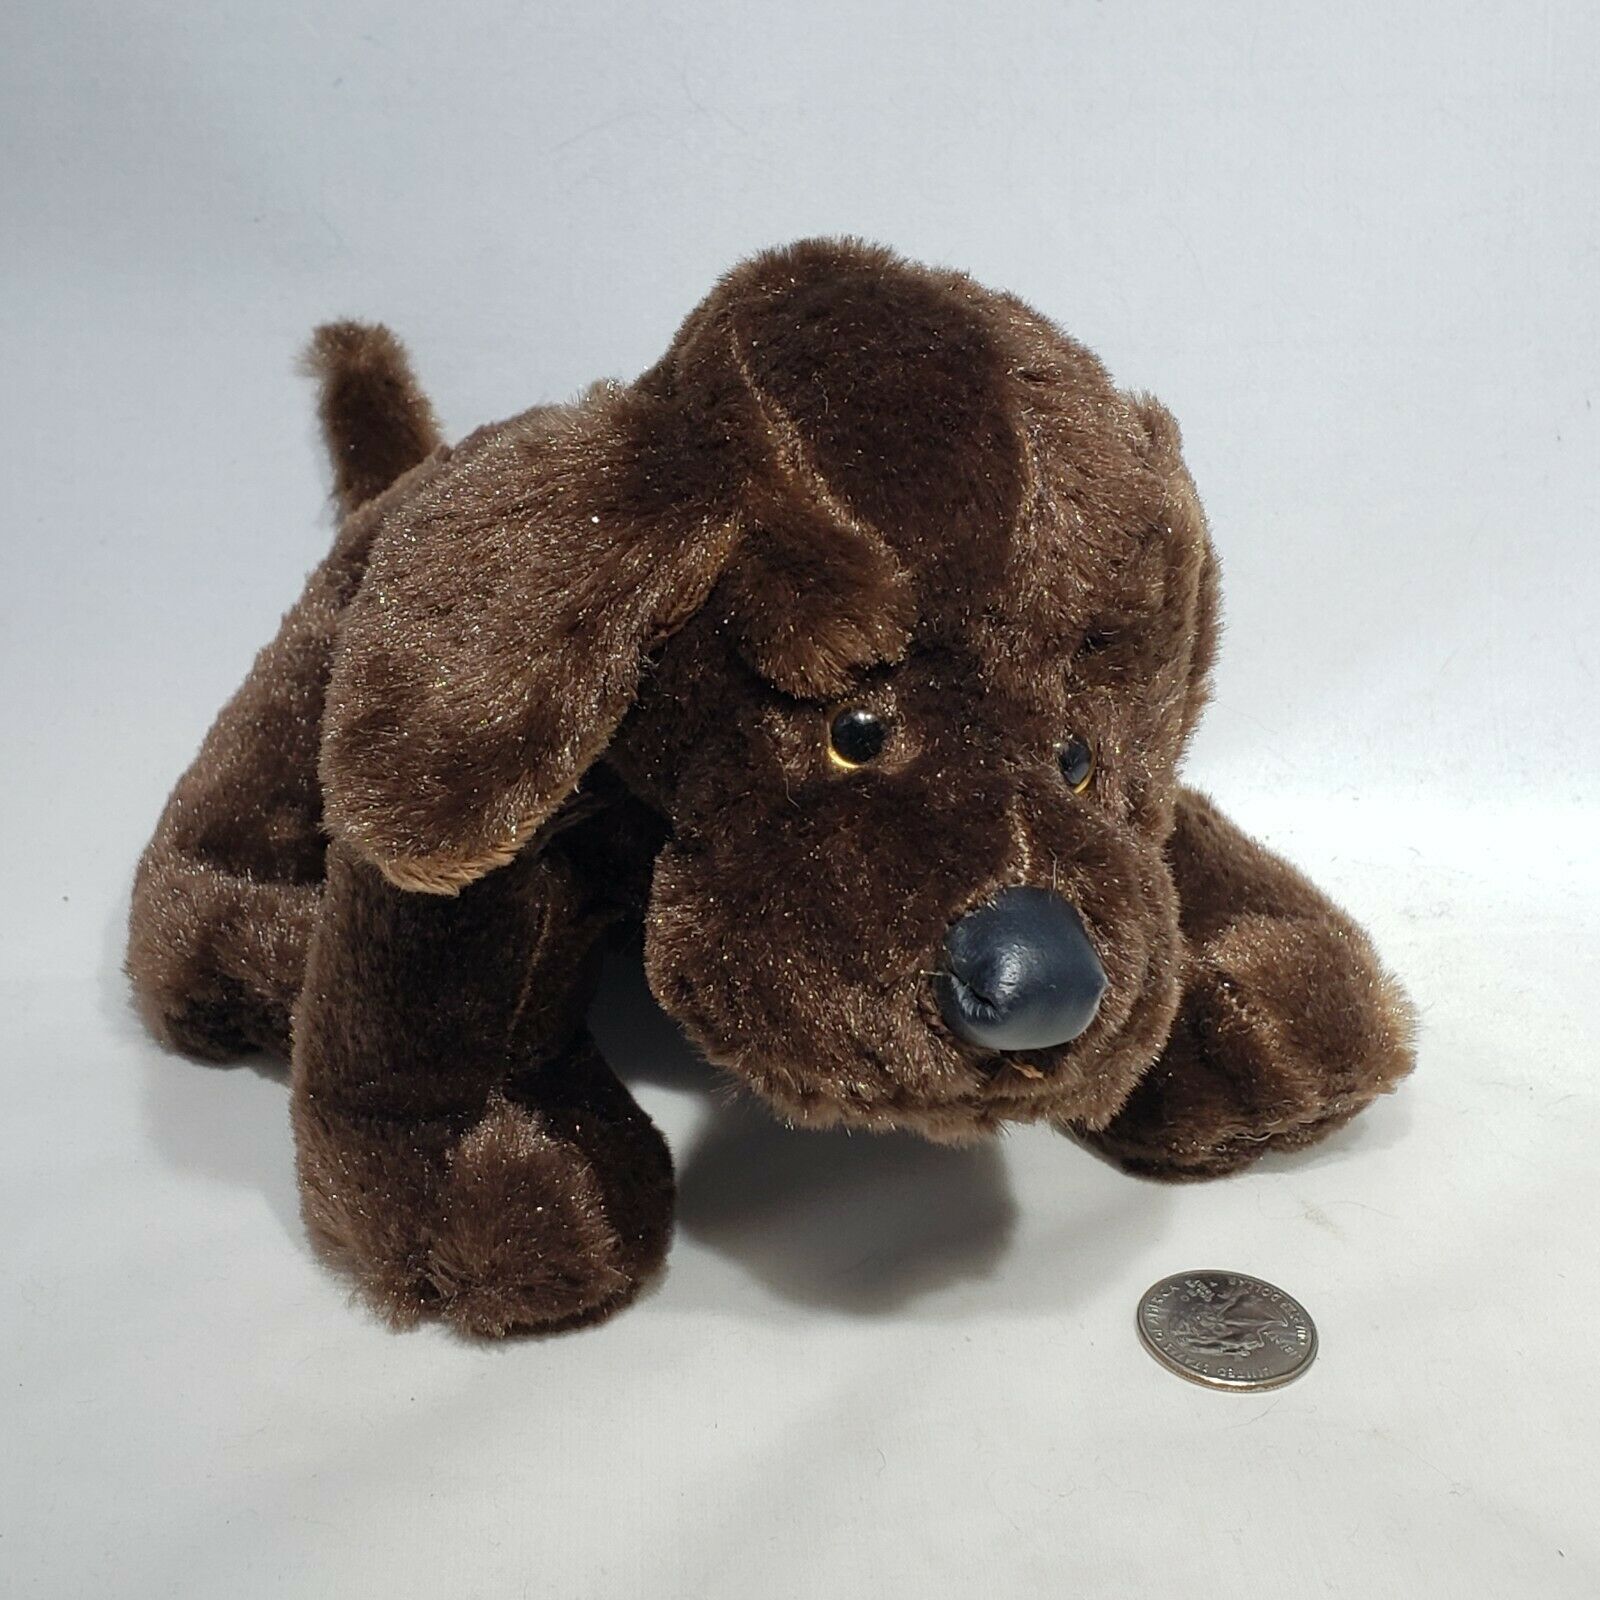 Primary image for Ganz Webkinz Chocolate Lab Dog Plush HM138 Stuffed Animal no Code Retired